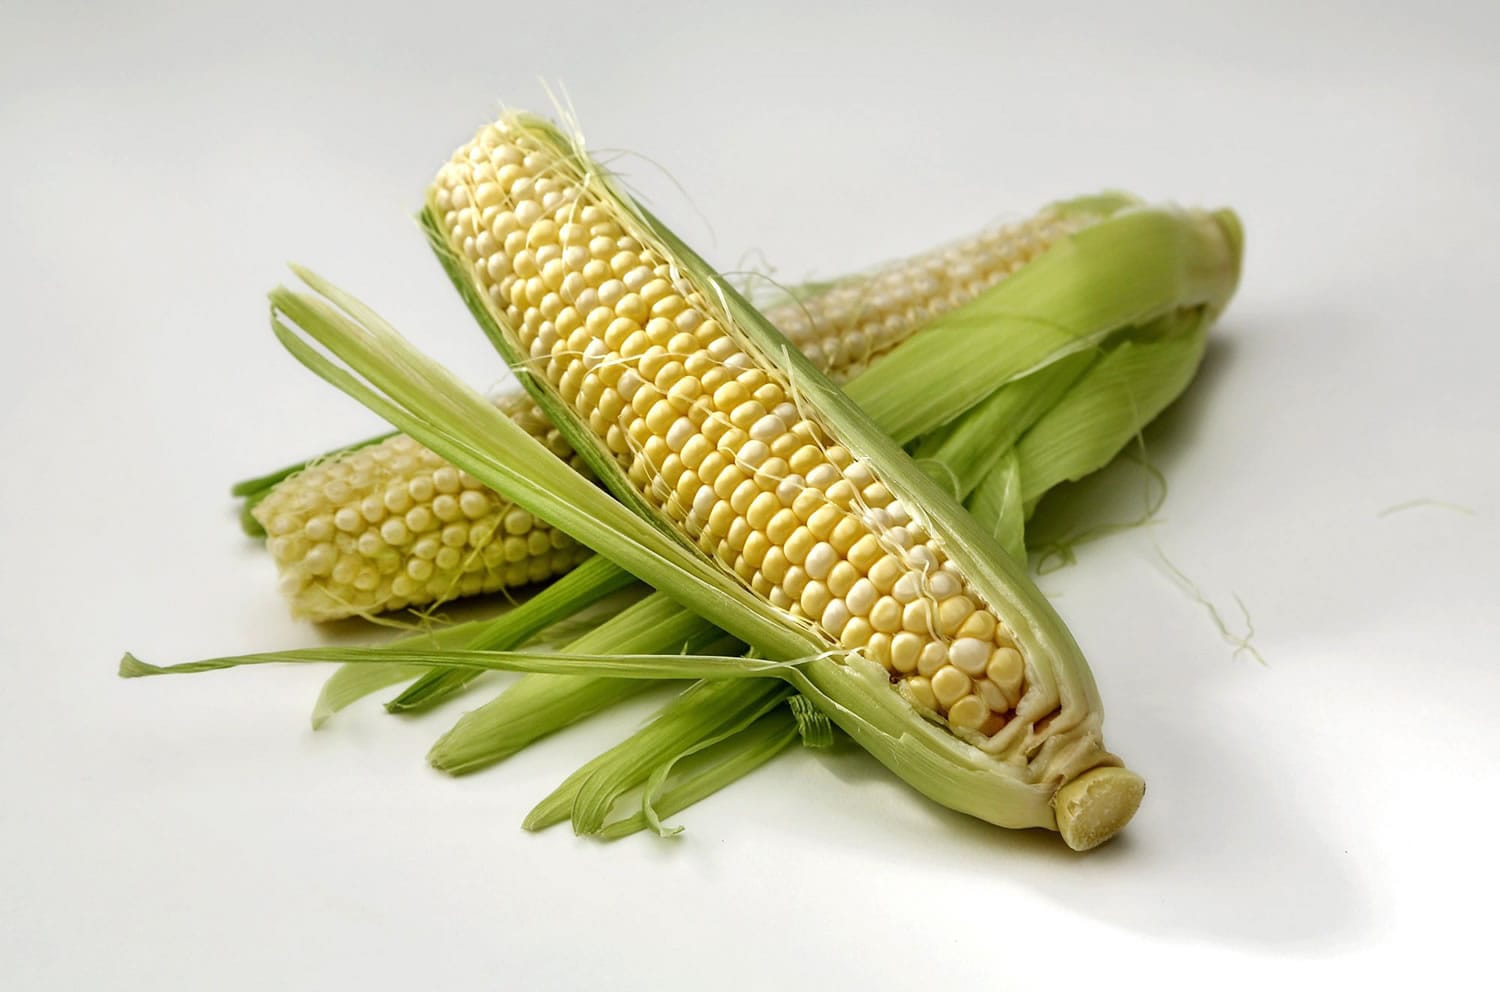 There are many creative ways to serve the seasonal bounty of corn.